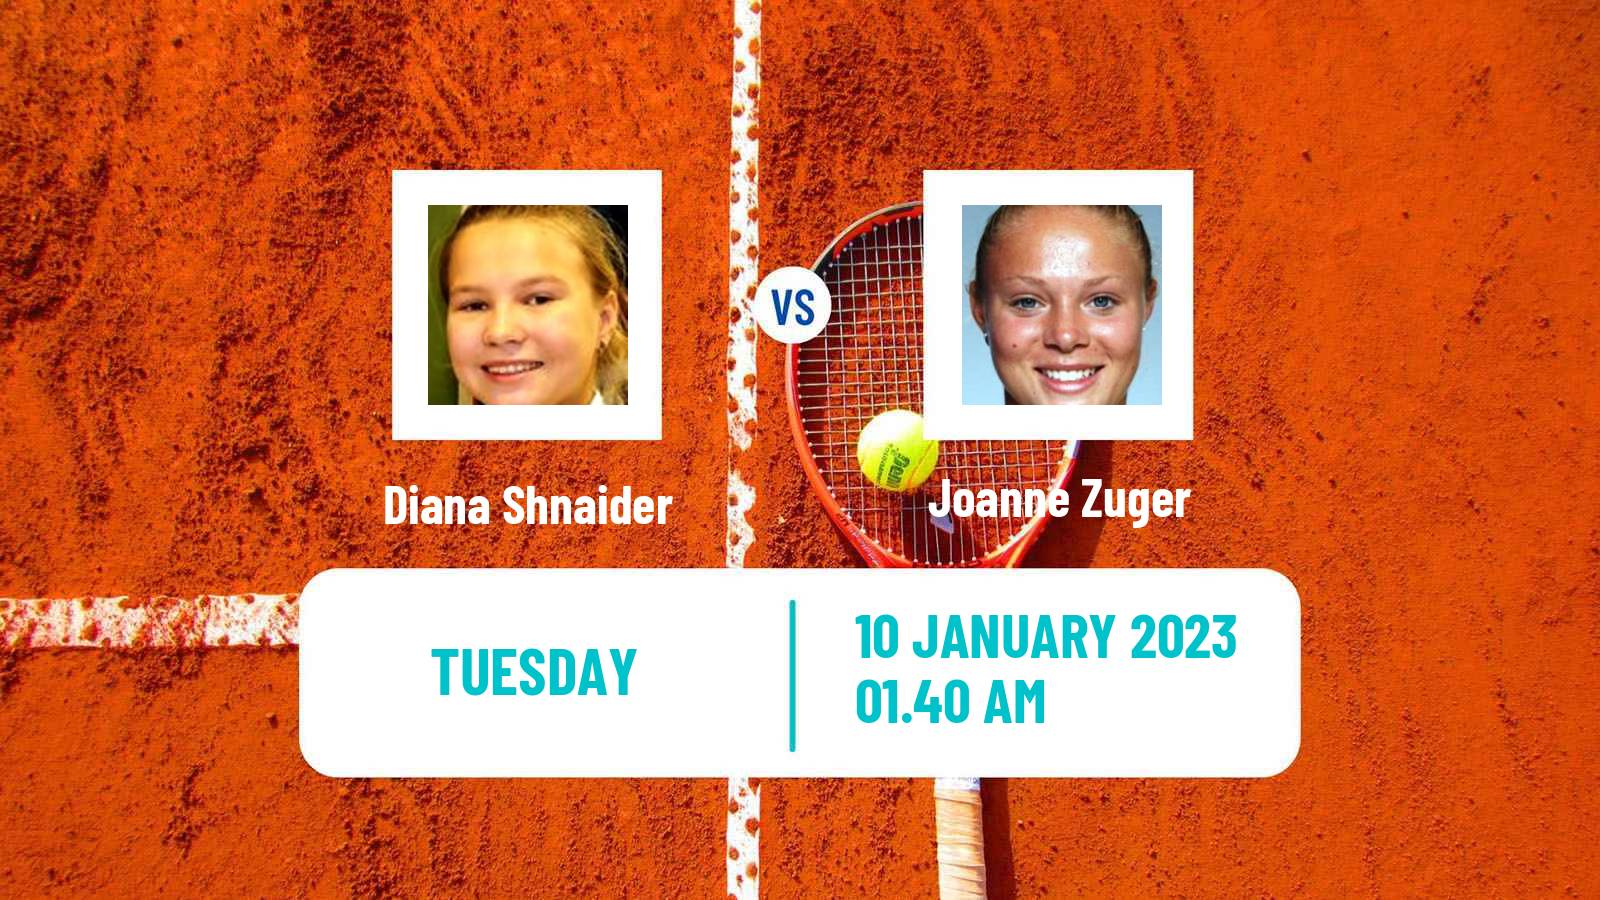 Tennis WTA Australian Open Diana Shnaider - Joanne Zuger